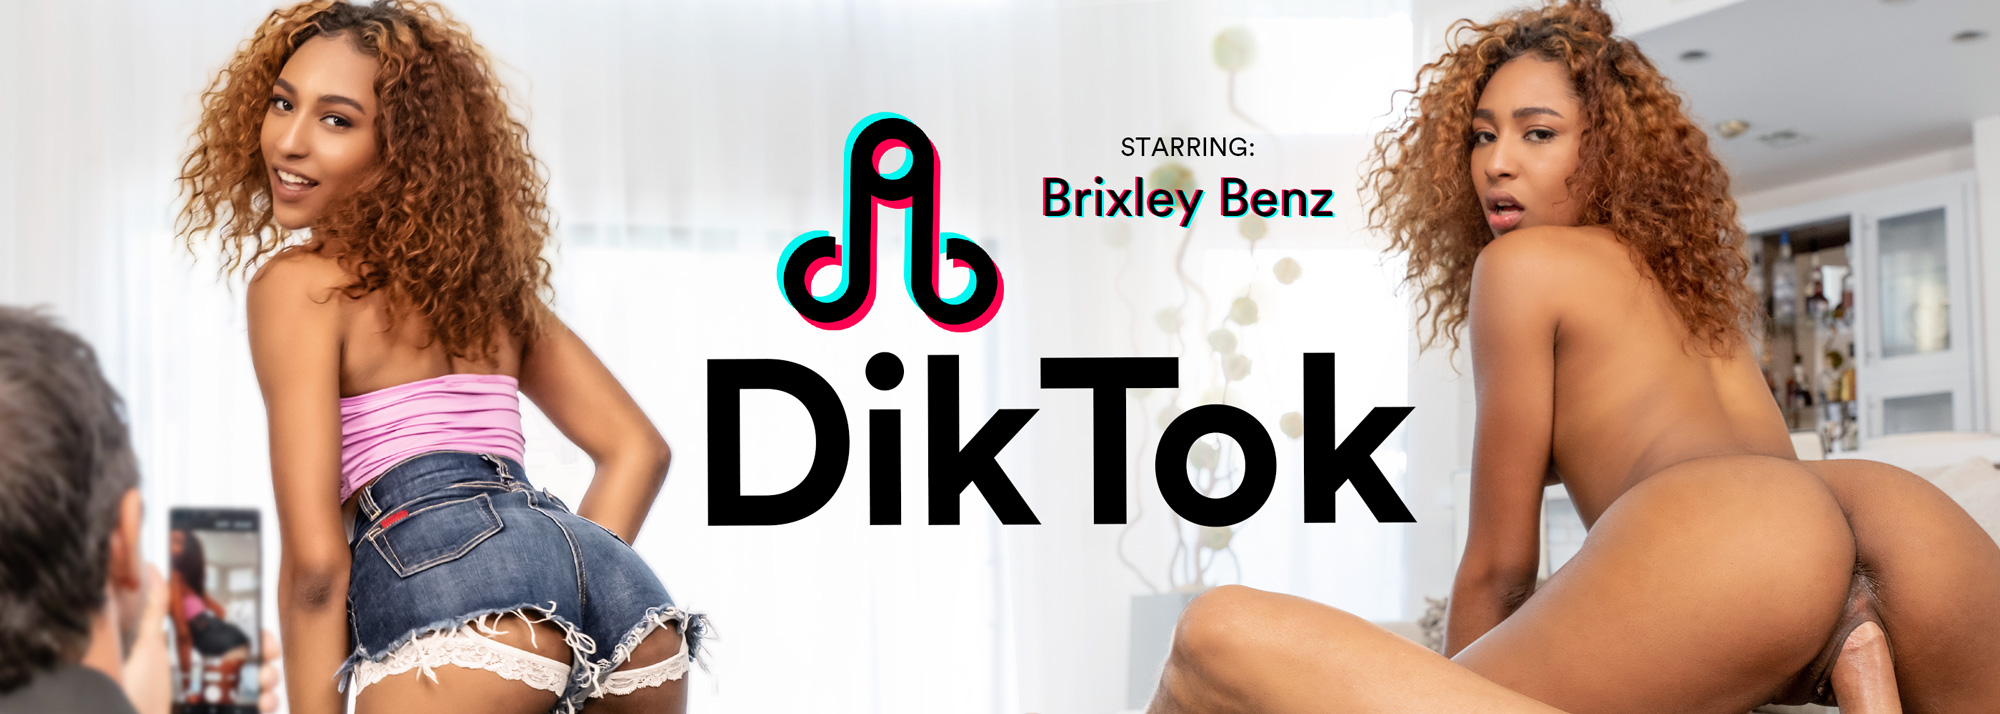 DikTok - VR Porn Video, Starring: Brixley Benz